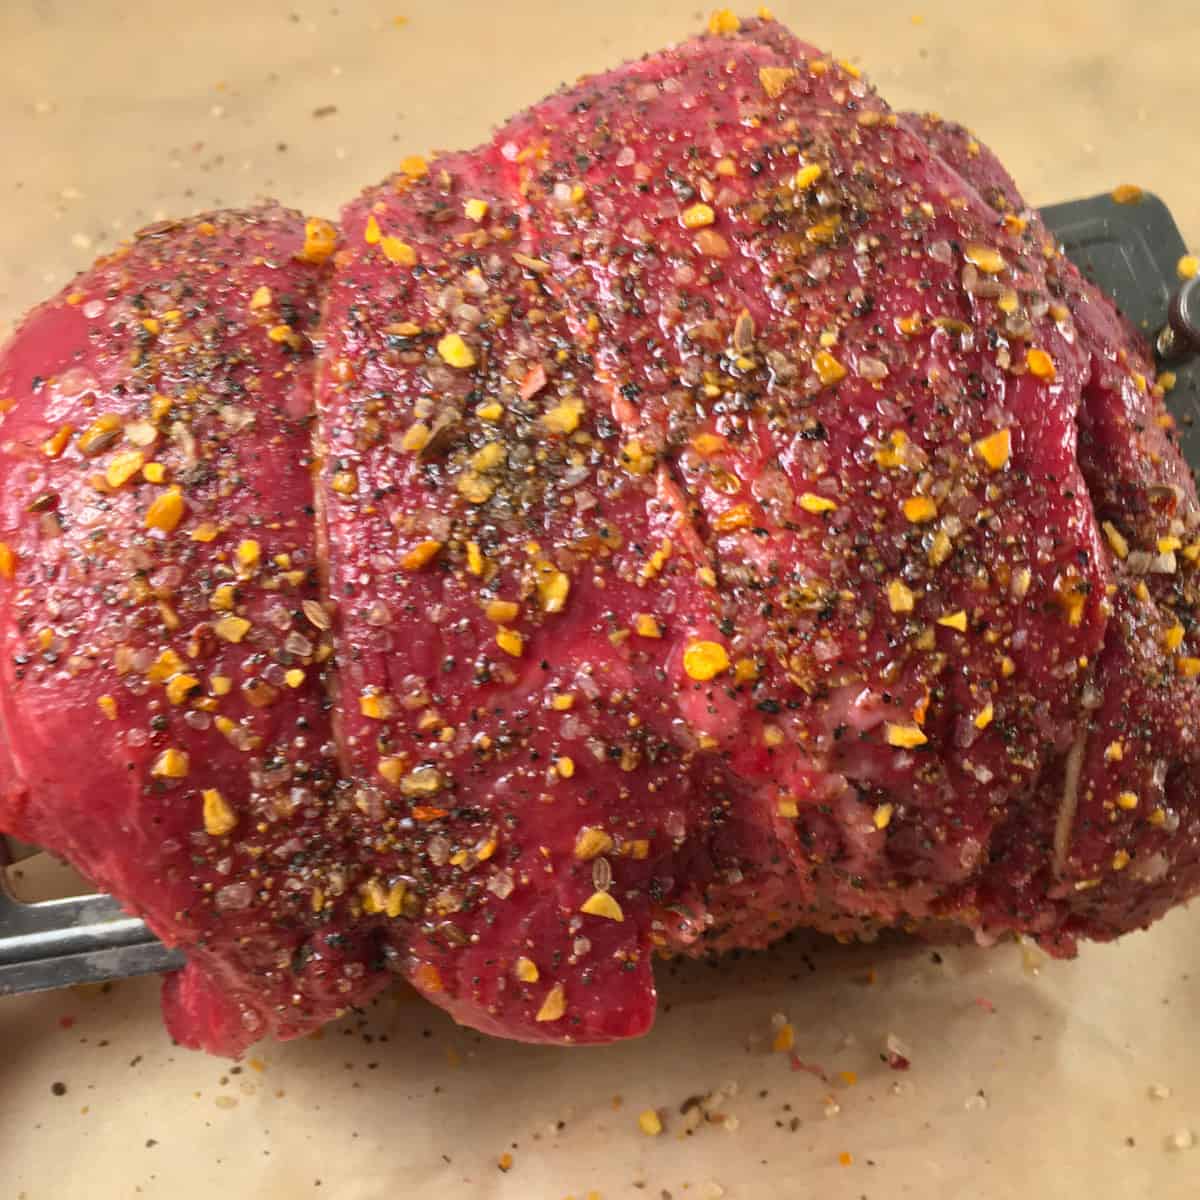 roast beef on air fryer spit